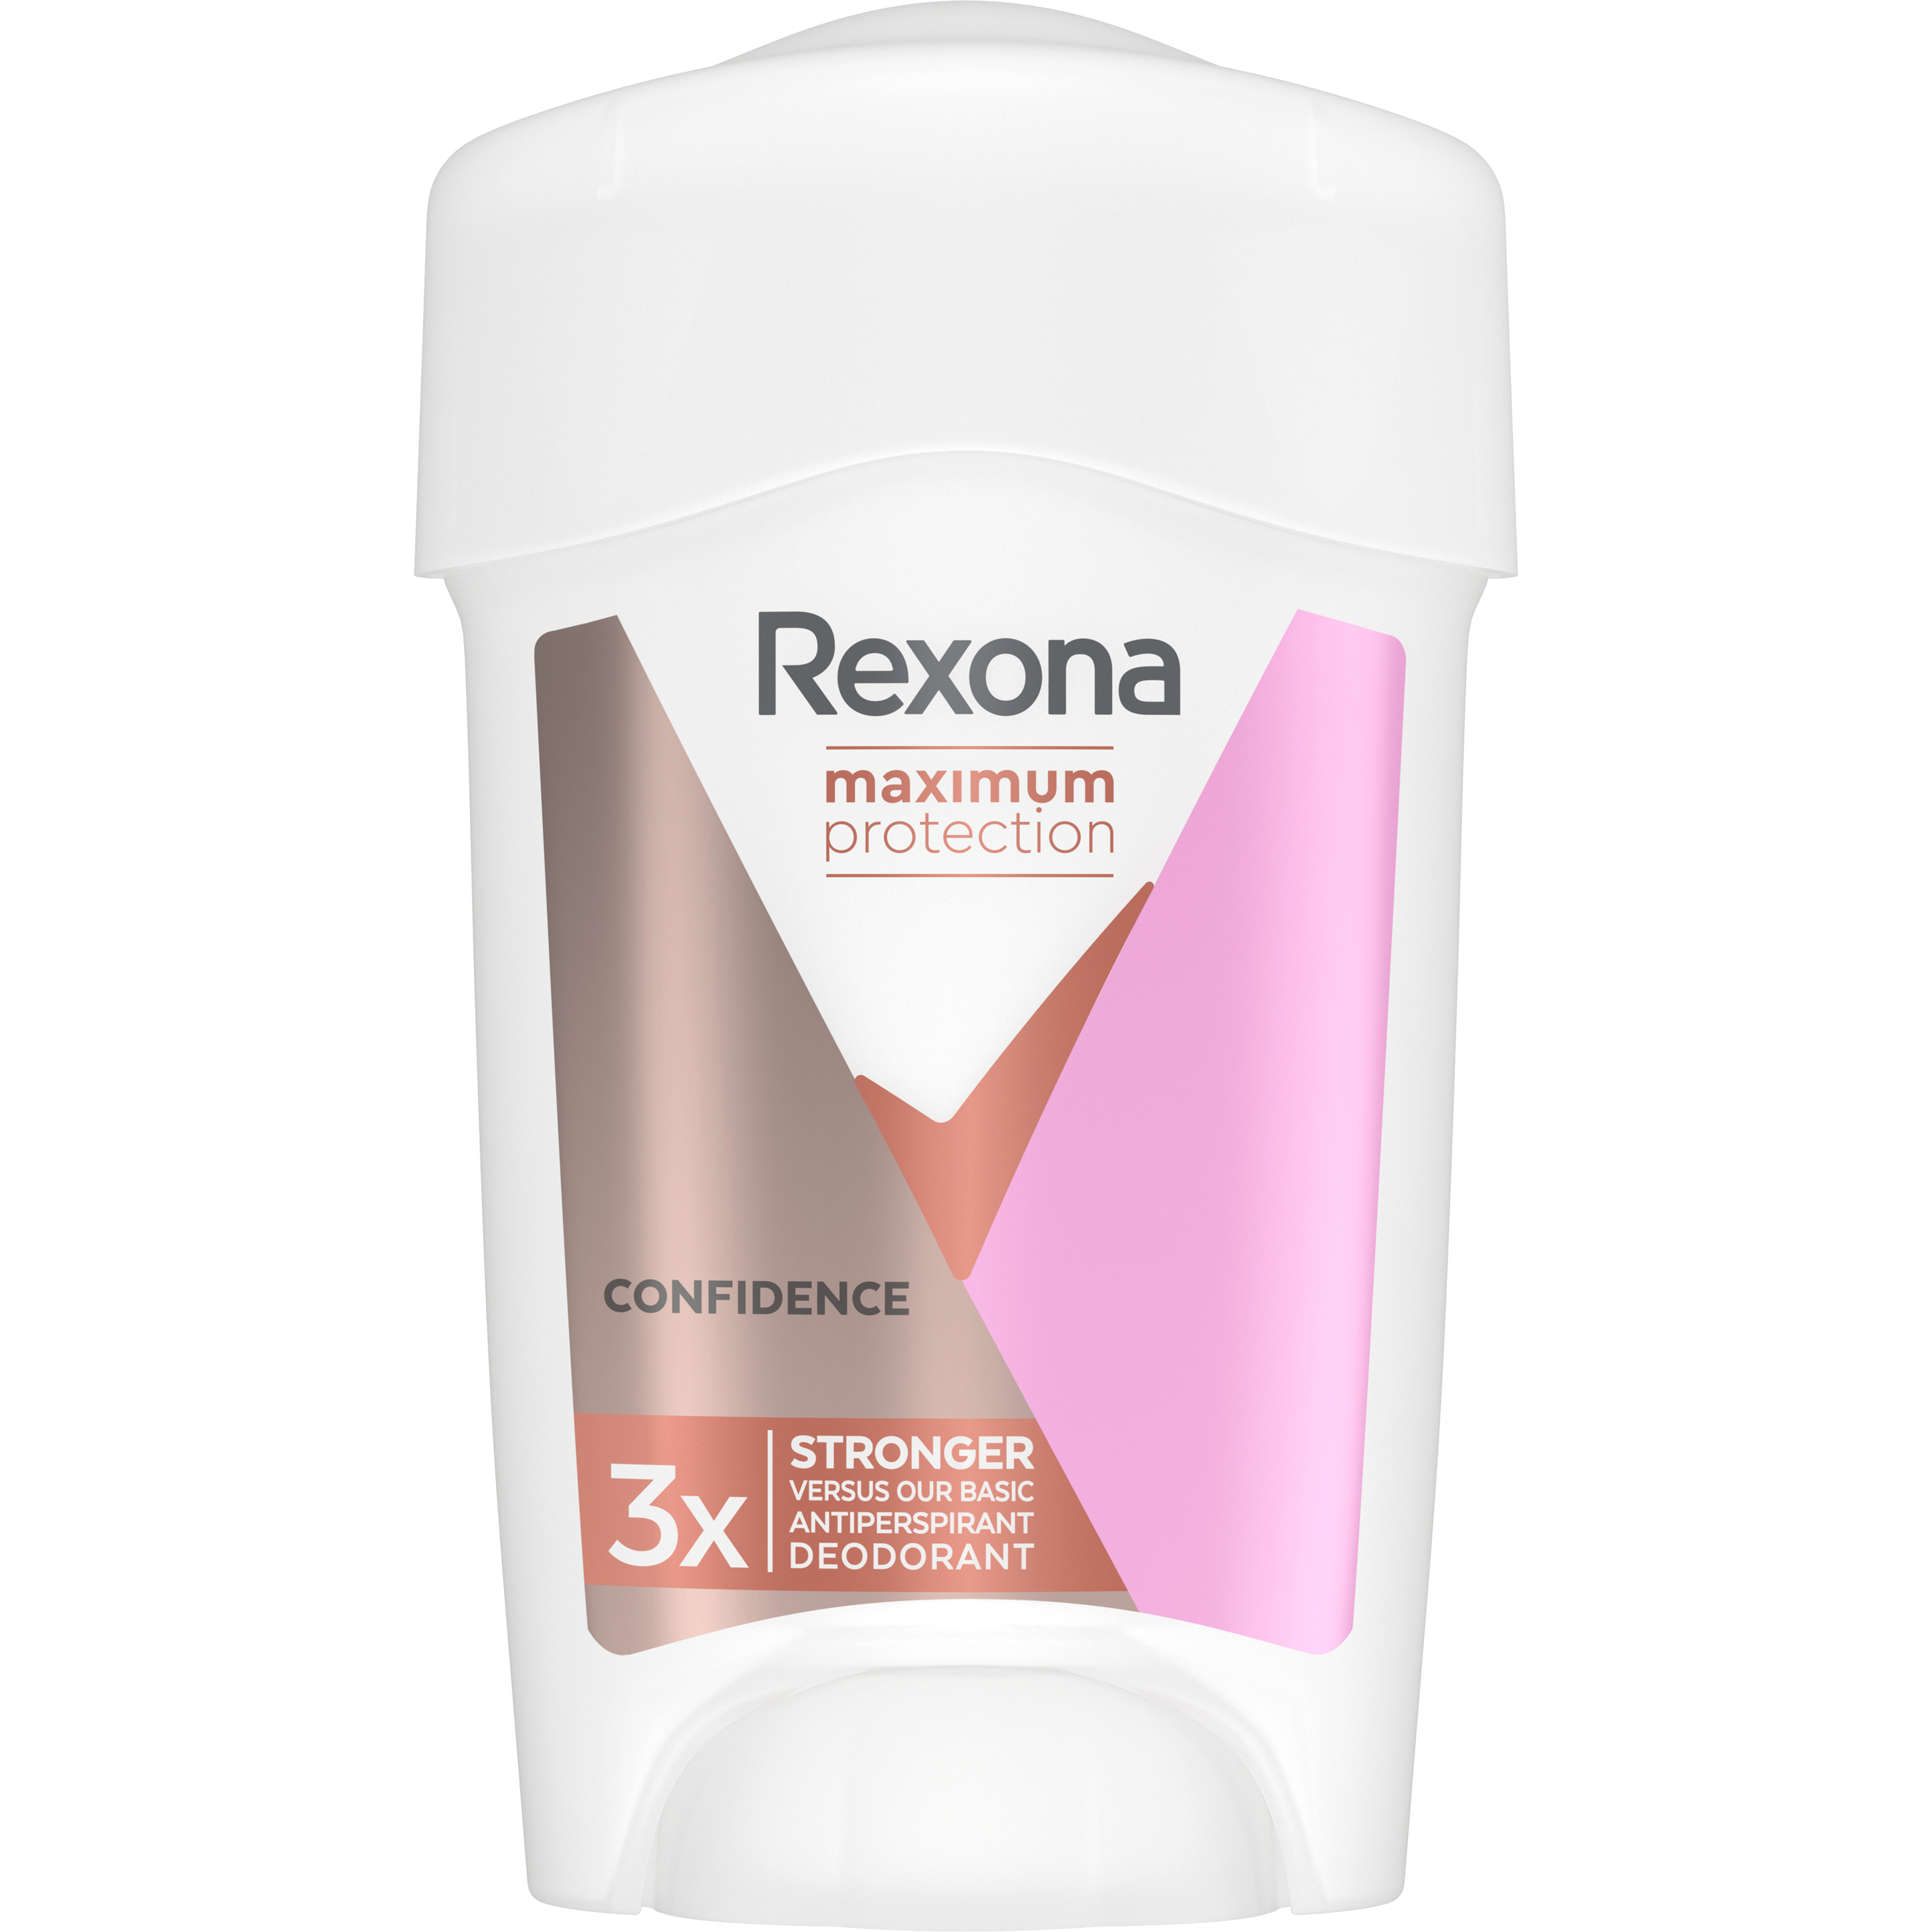 Zdjęcia - Dezodorant Rexona Maximum Protection Confidence 45ml - Antyperspirant 45 ml 